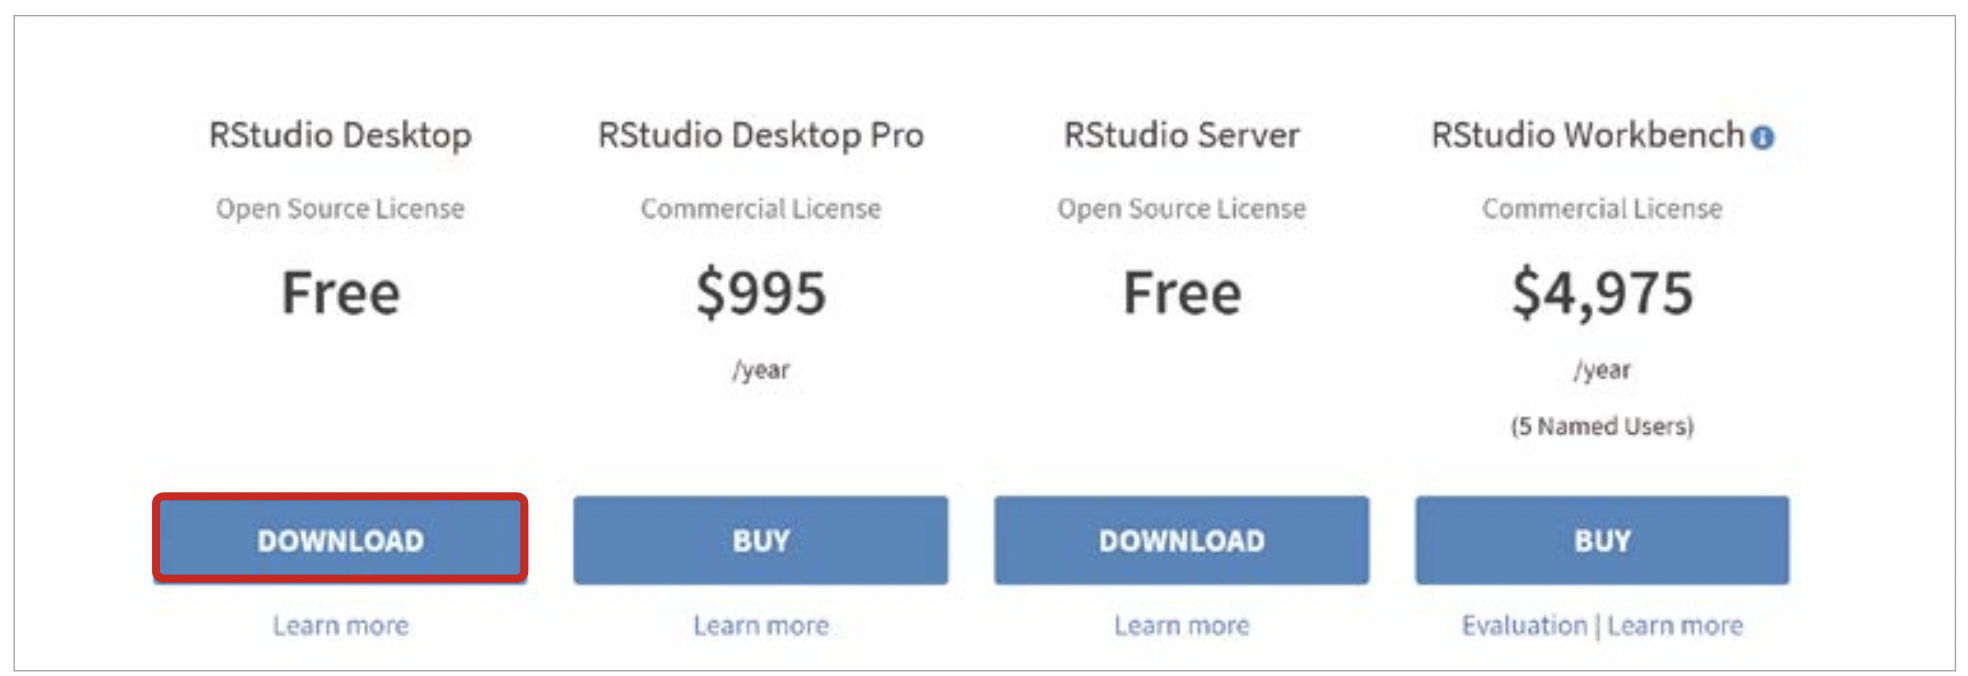 rstudio desktop free